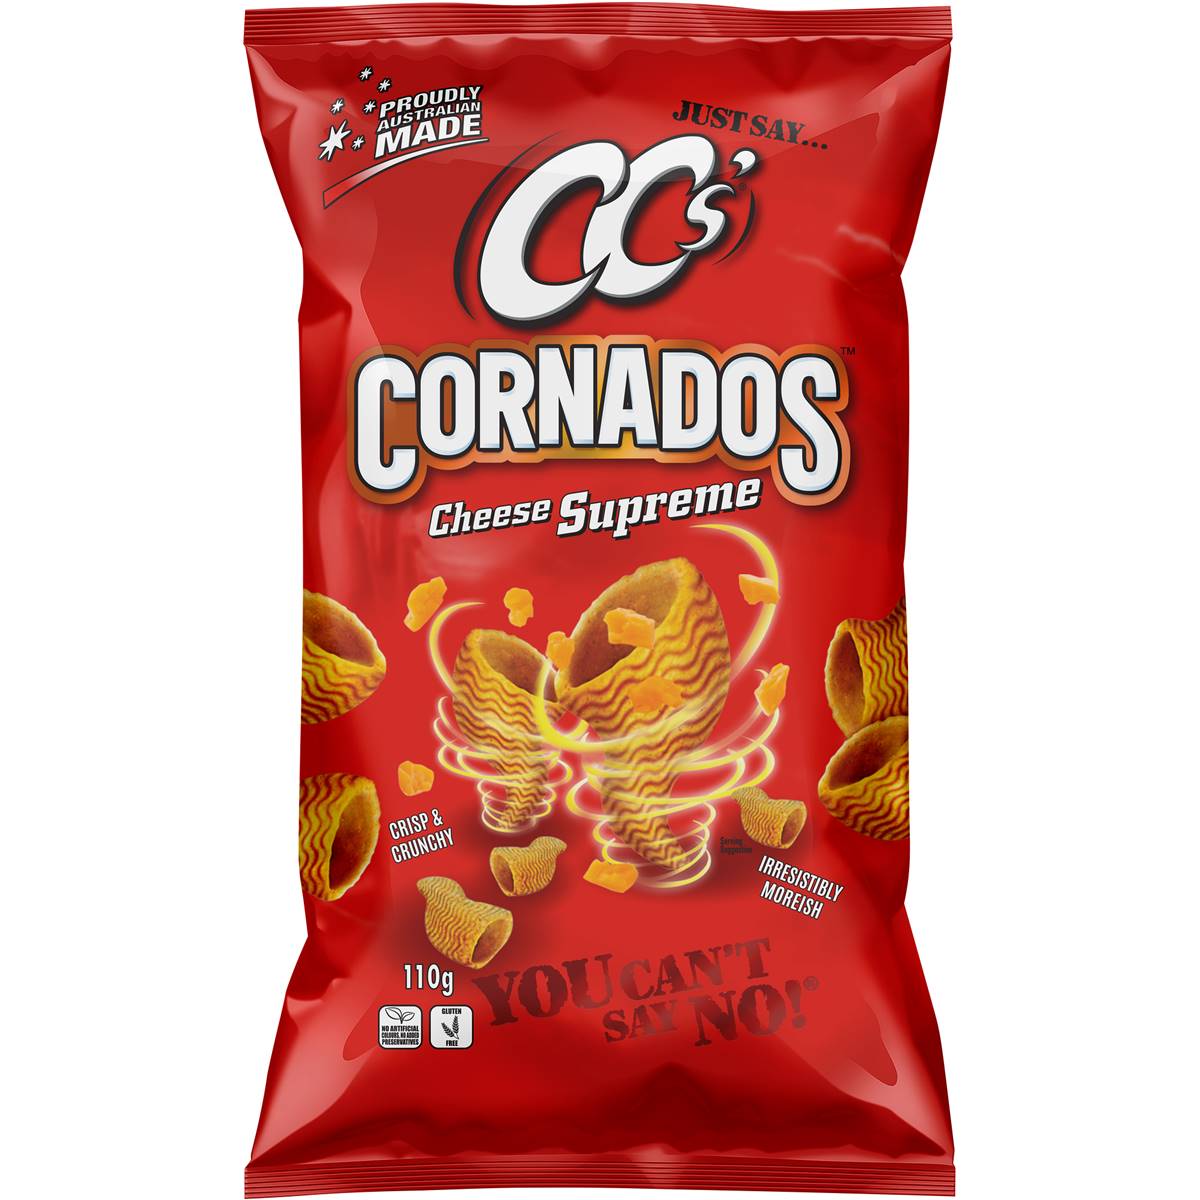 CC's Cornados Corn Chips Cheese Supreme 110g